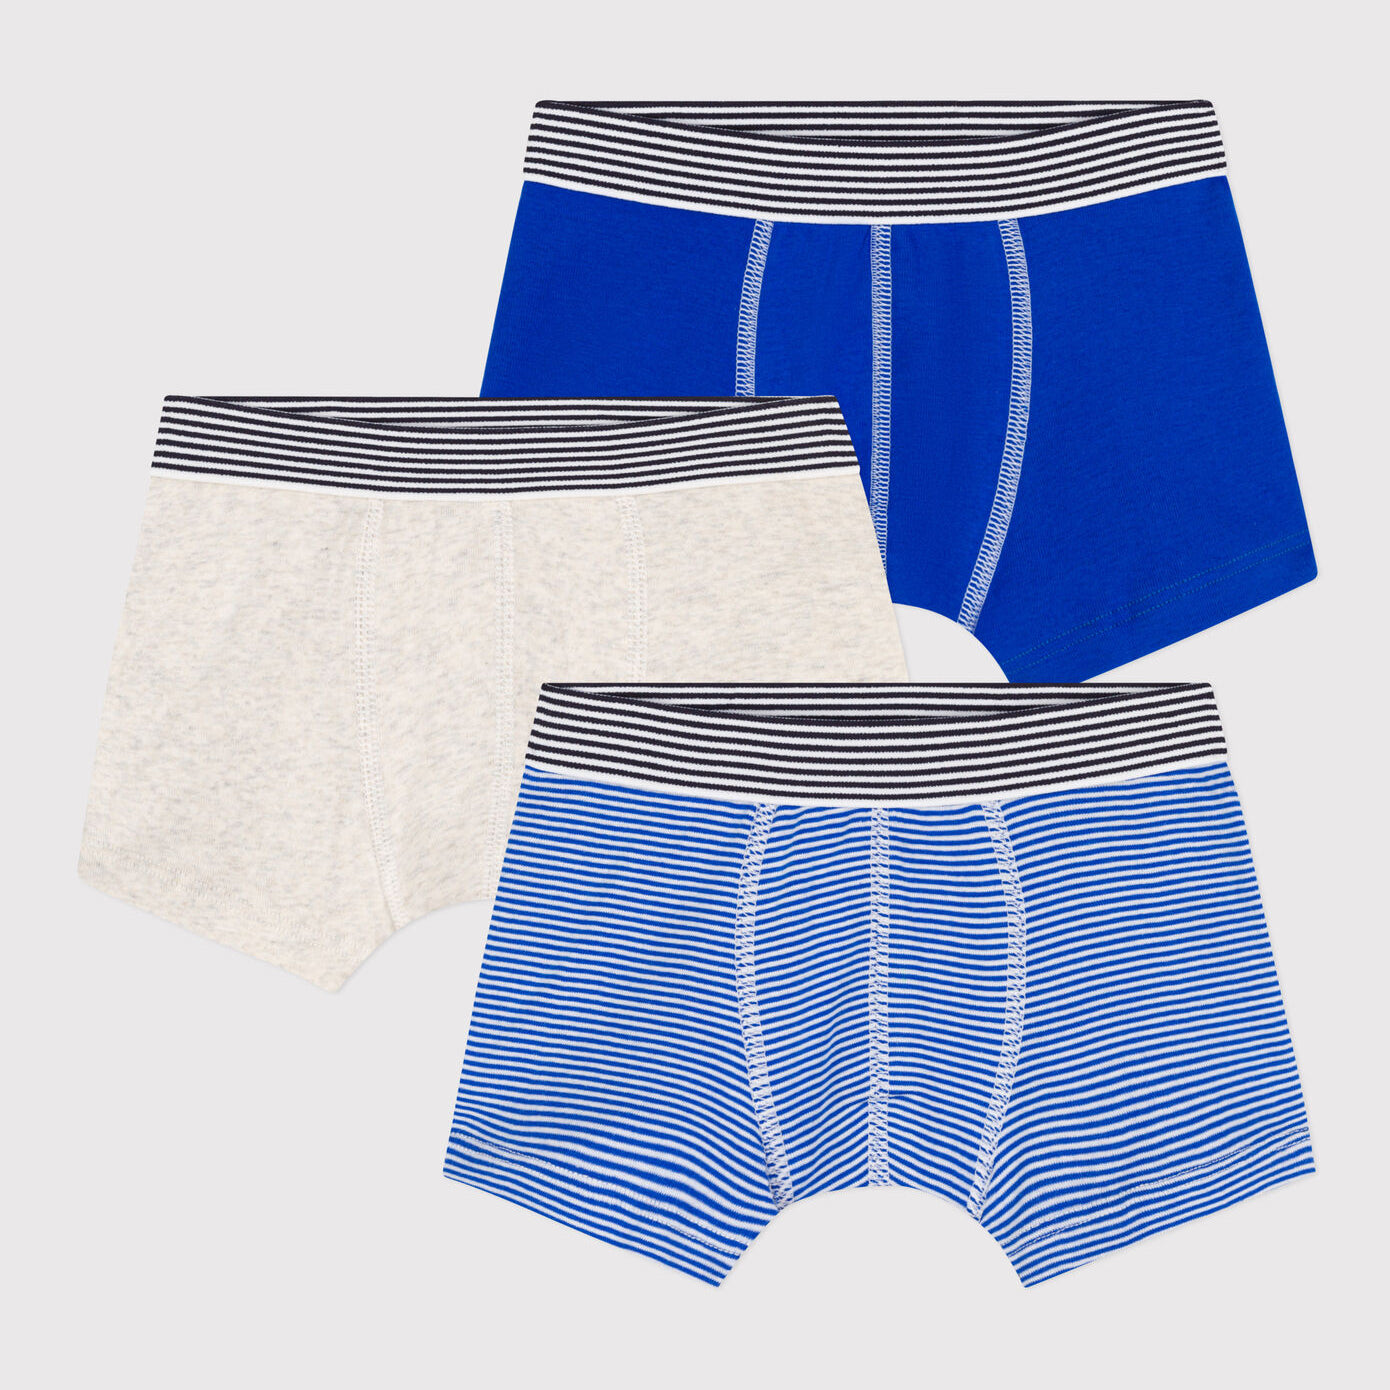 Boys Blue Stripes Cotton Underwear Set(3 Pack)